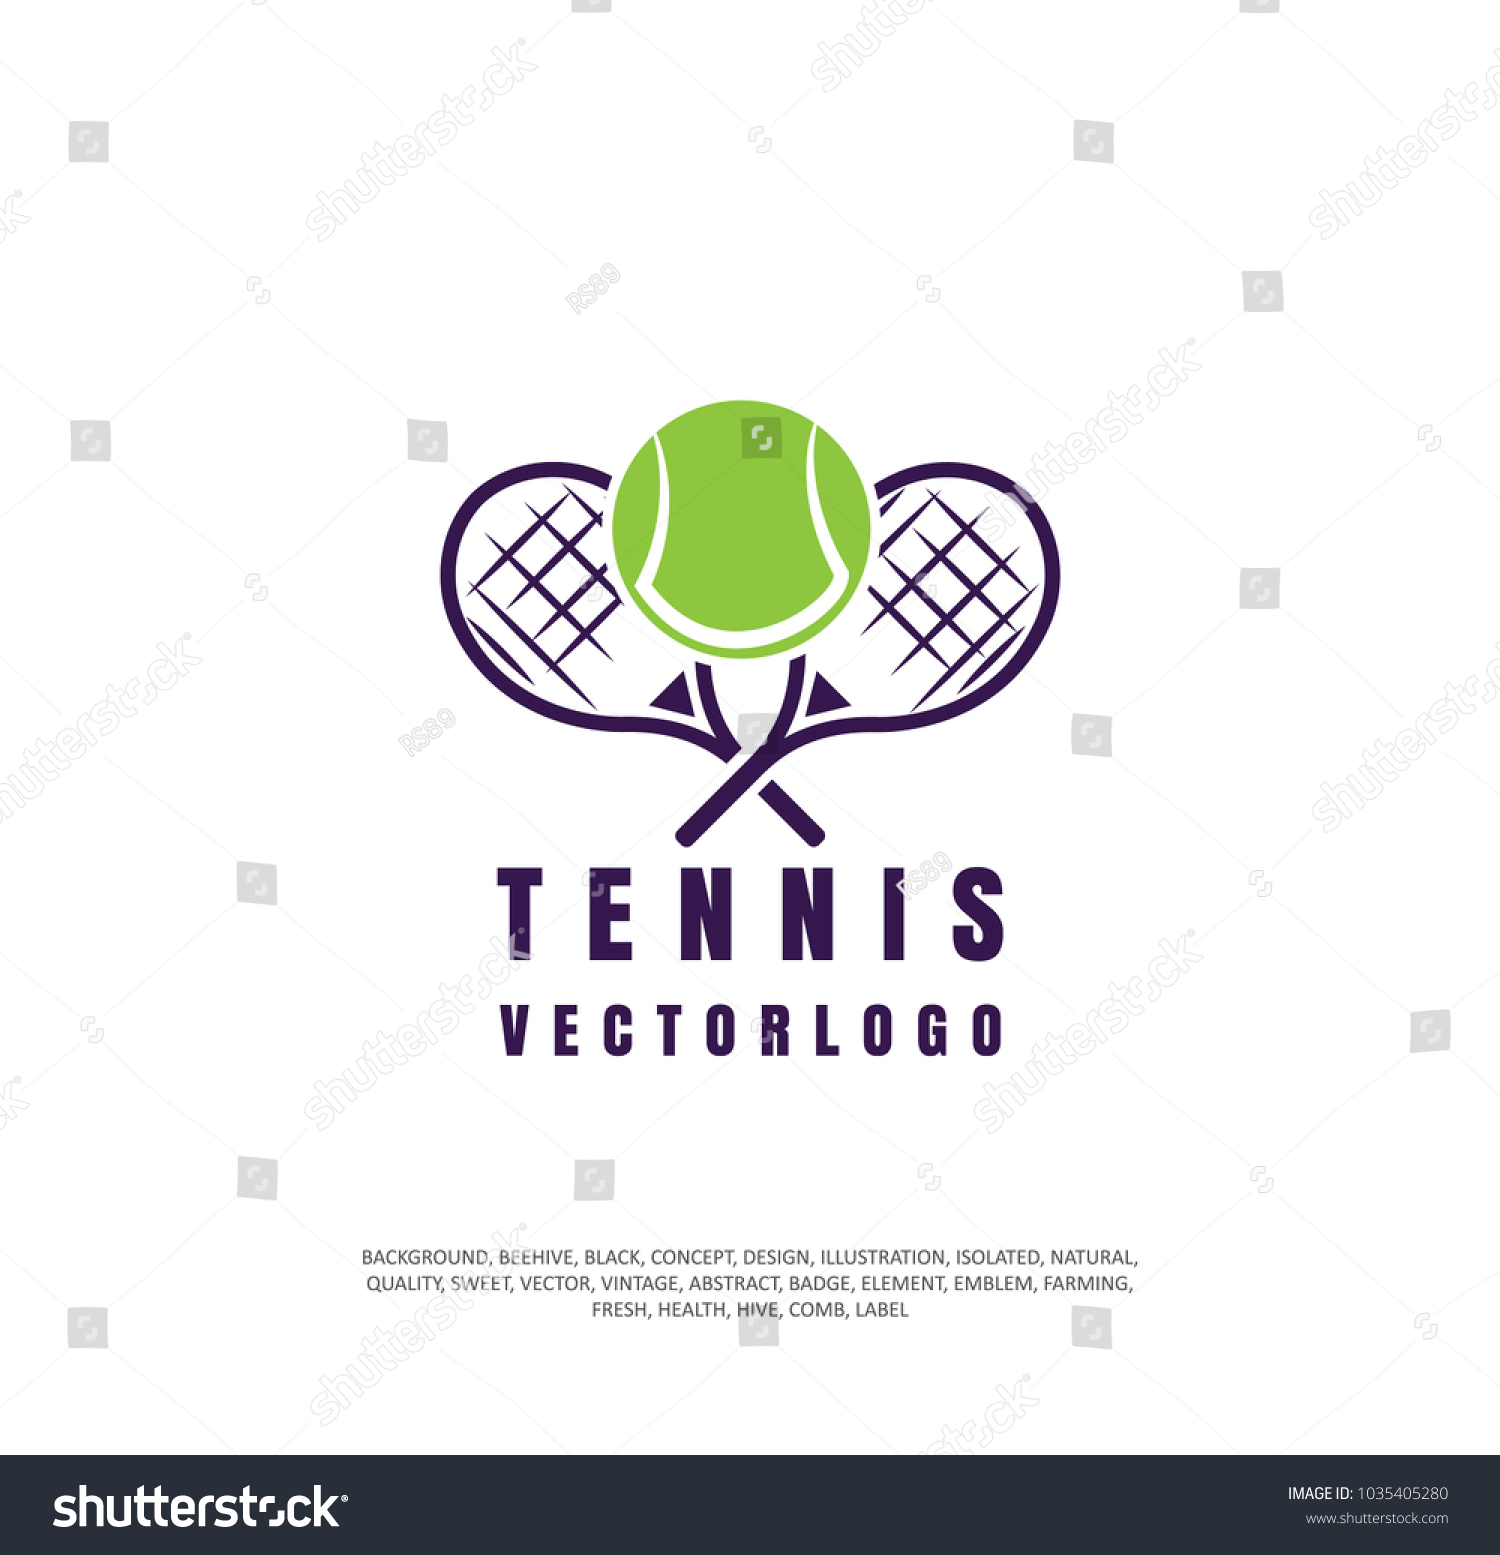 Lawn tennis logo Images, Stock Photos & Vectors | Shutterstock ( https://www.shutterstock.com › search › lawn+tennis+lo... ) 